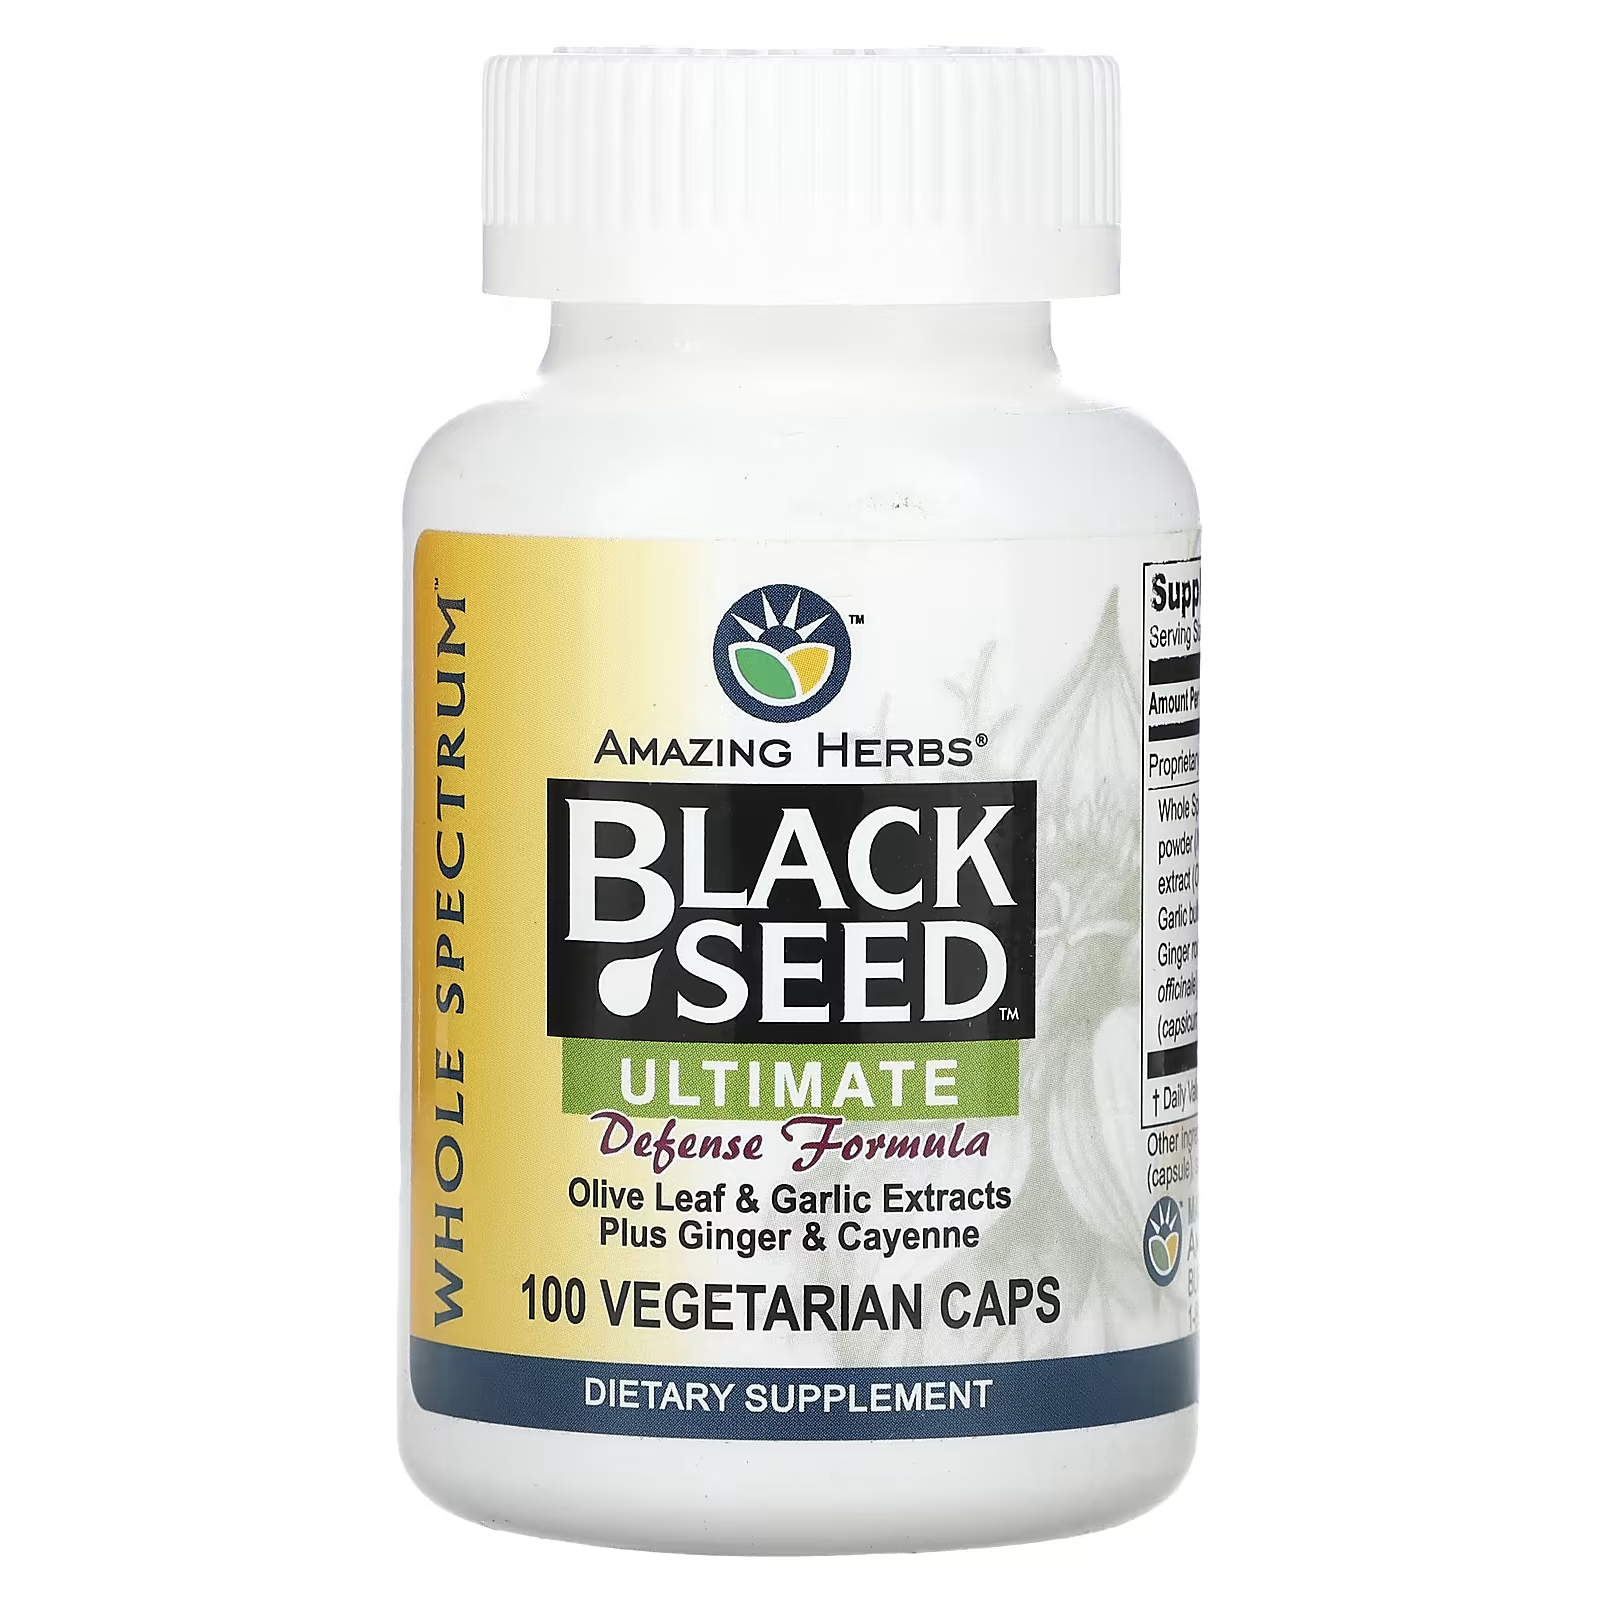 Пищевая добавка Amazing Herbs Black Seed Ultimate Defense Formula, 100 капсул country farms яблочный уксус имбирь кайенский перец и клен 90 капсул